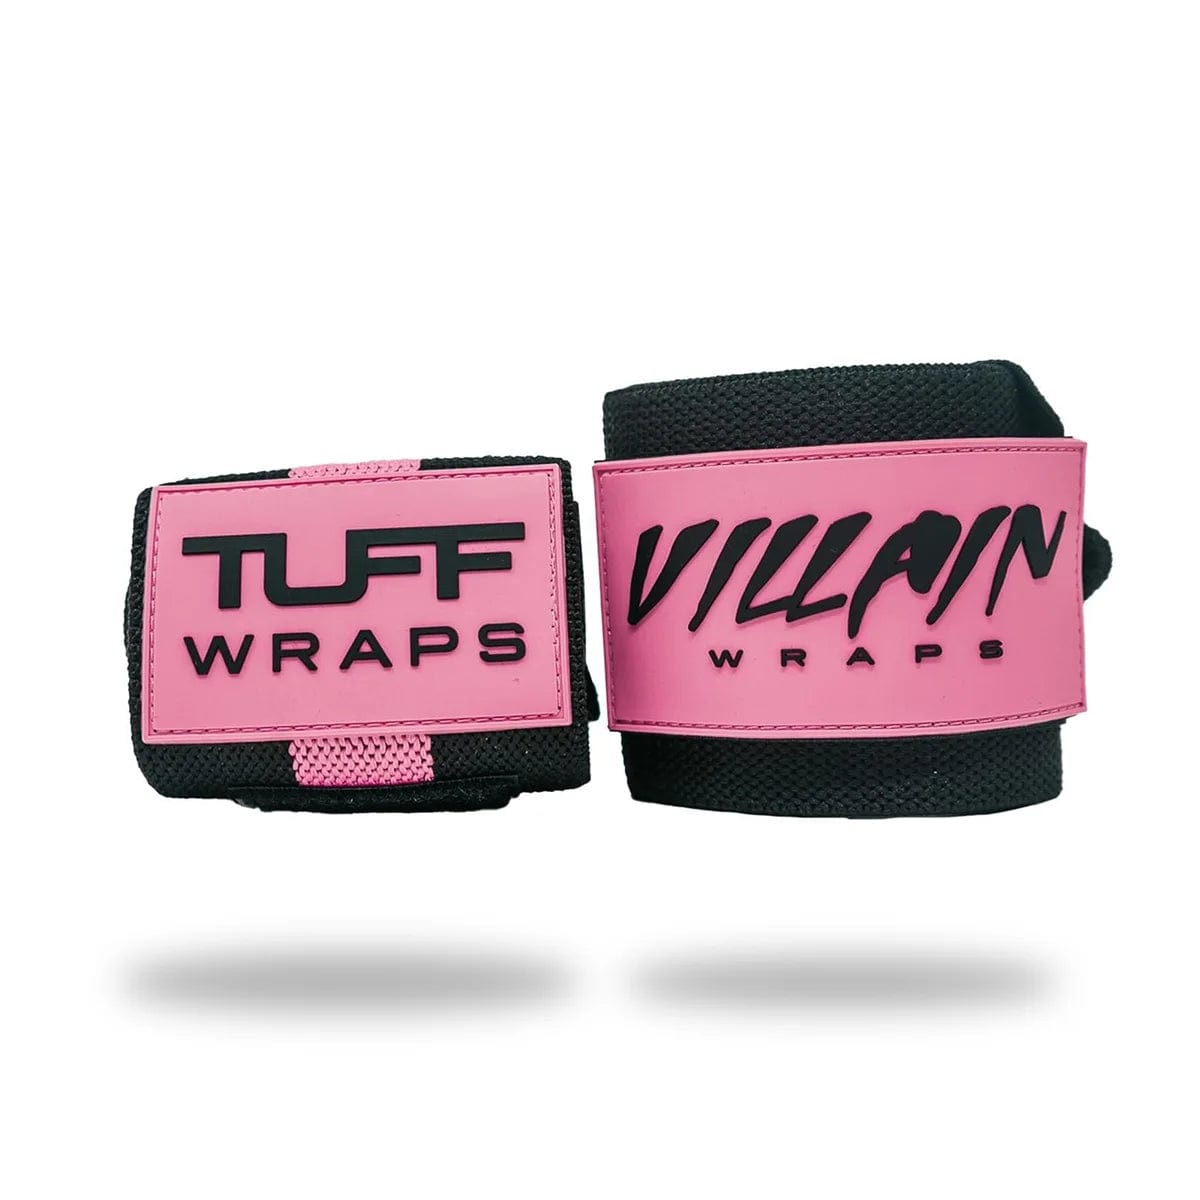 16&quot; Villain Sidekick Wrist Wraps - Black &amp; Pink - Breast Cancer TuffWraps.com